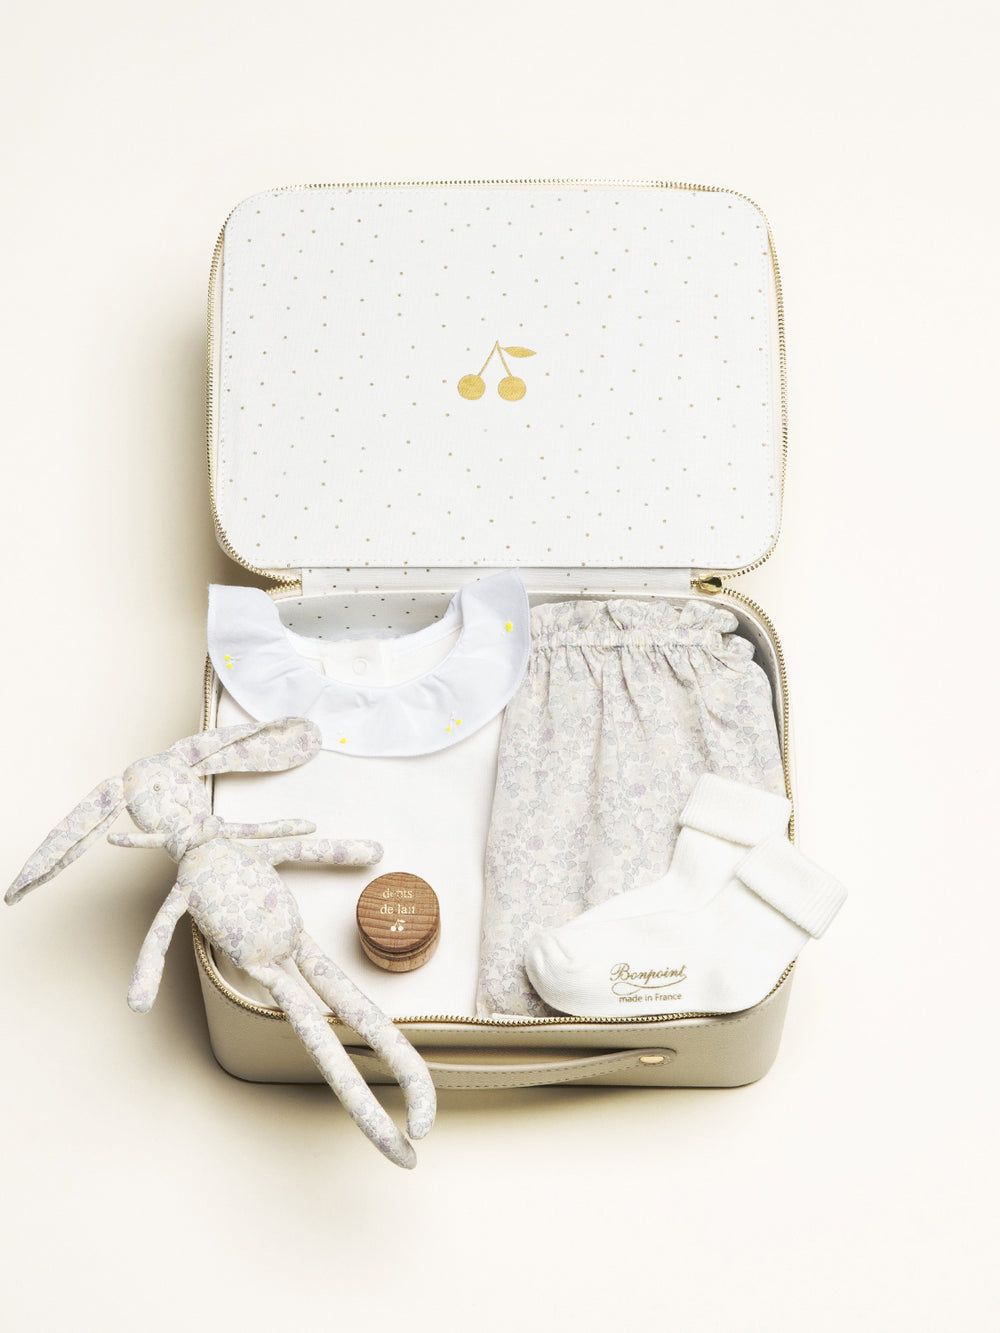 Medium birth suitcase for girls